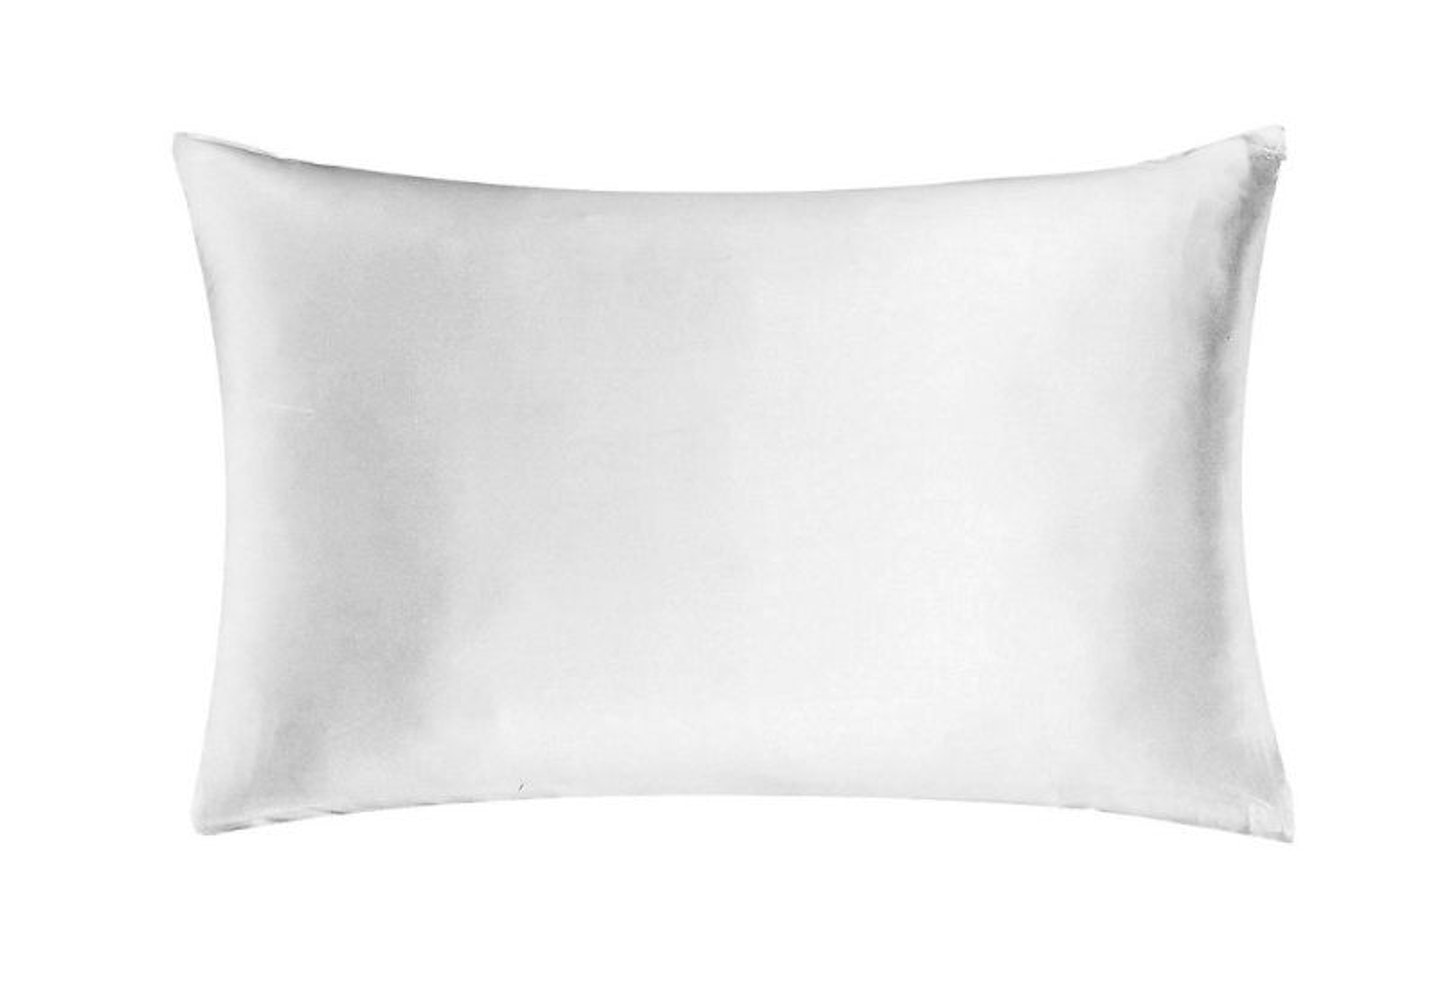 ThisIsSilk Pure Silk Pillowcase